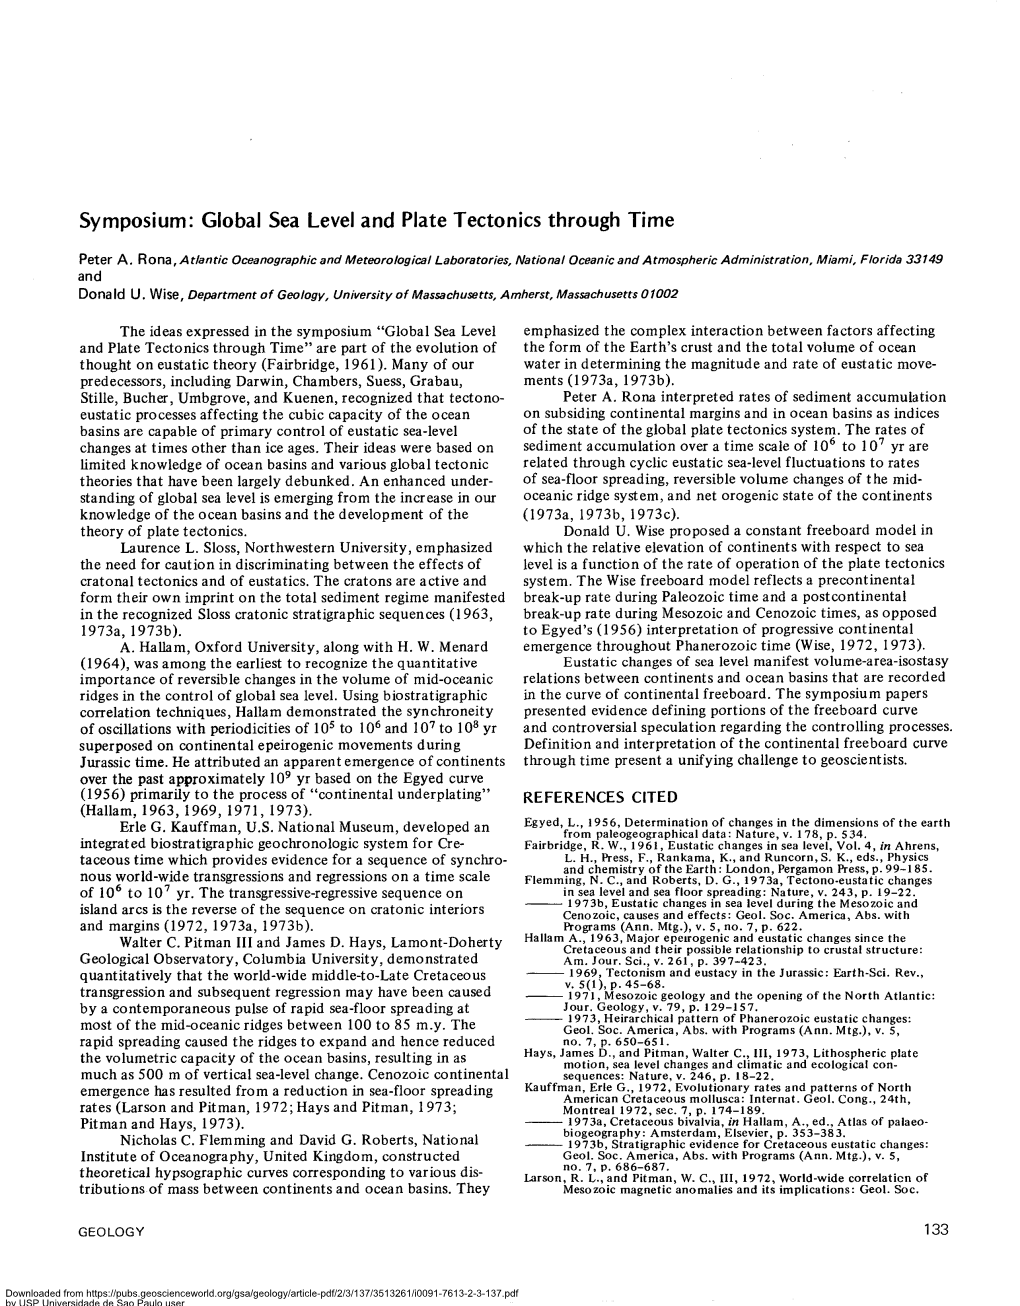 Symposium: Global Sea Level and Plate Tectonics Through Time